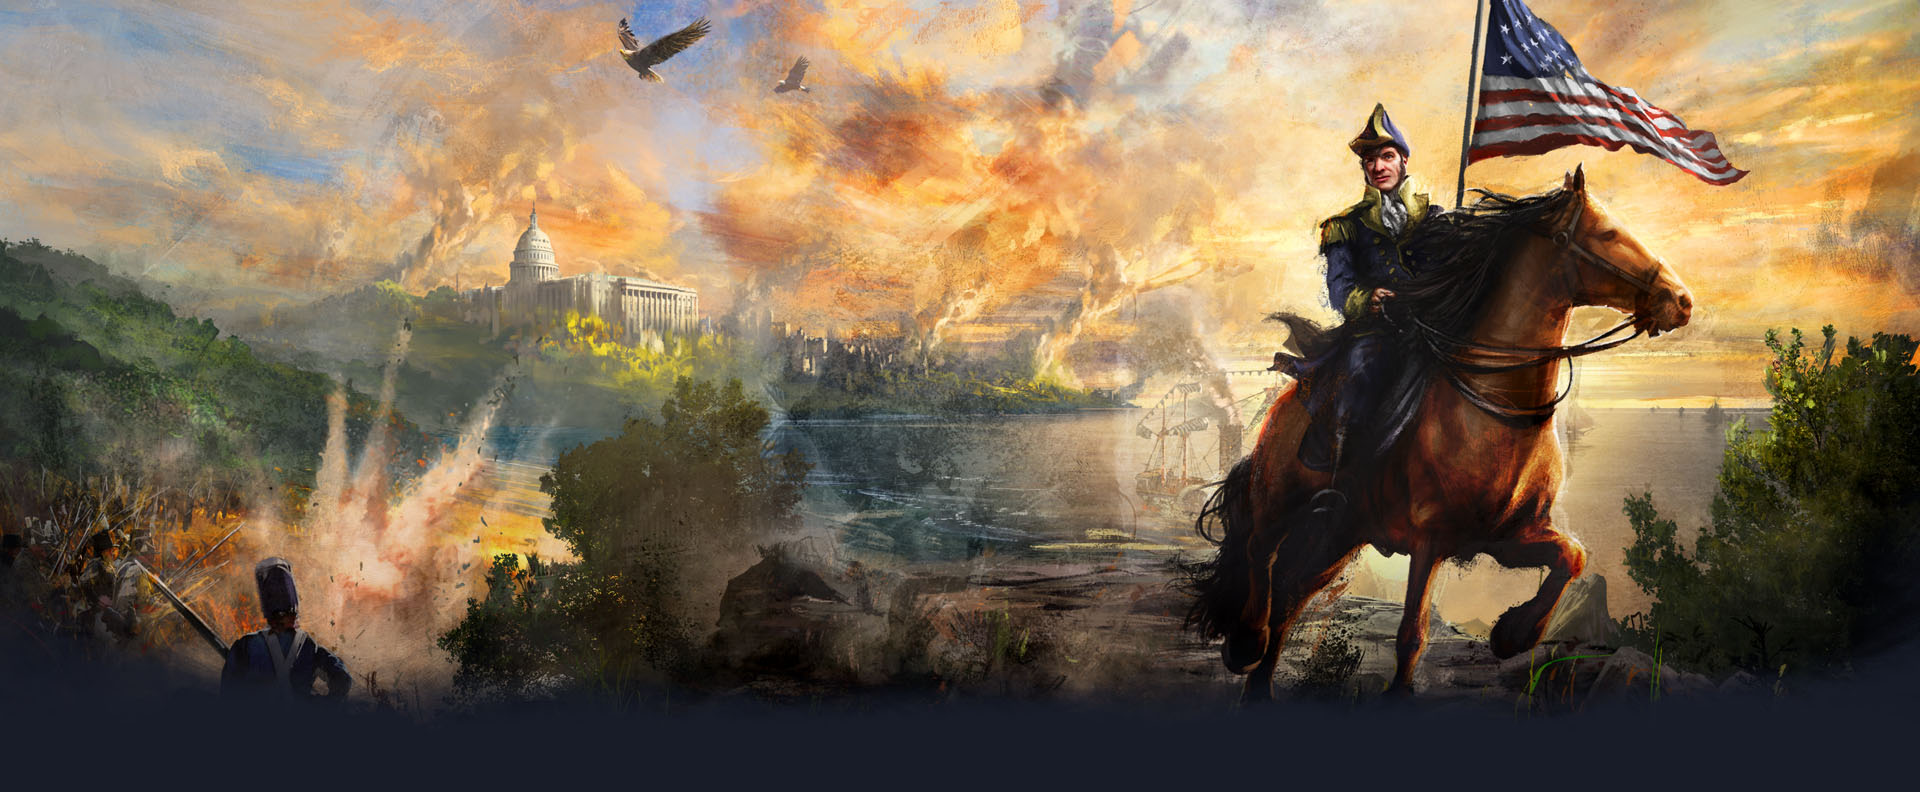 Age of Empires III: Definitive Edition – United States Civilization addon